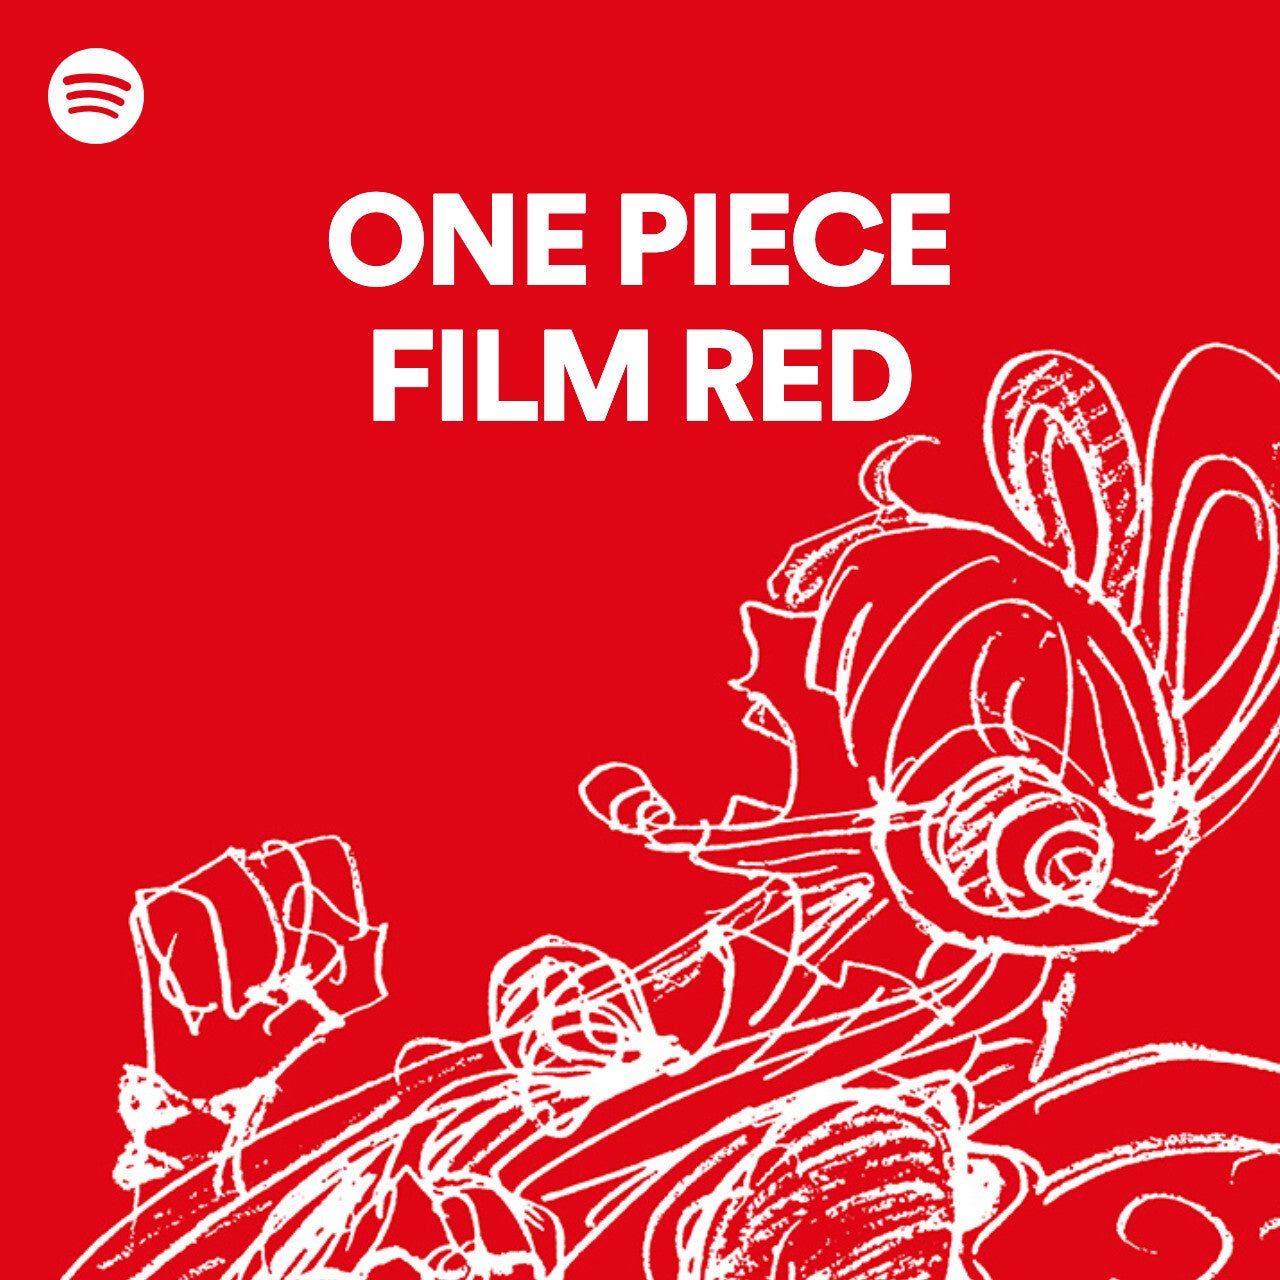 『ONE PIECE FILM RED』のさらなる魅力を、音楽や音声・映像などのエンタテインメントで多面的に楽しめるSpotifyだけのマルチコンテンツプレイリストが登場